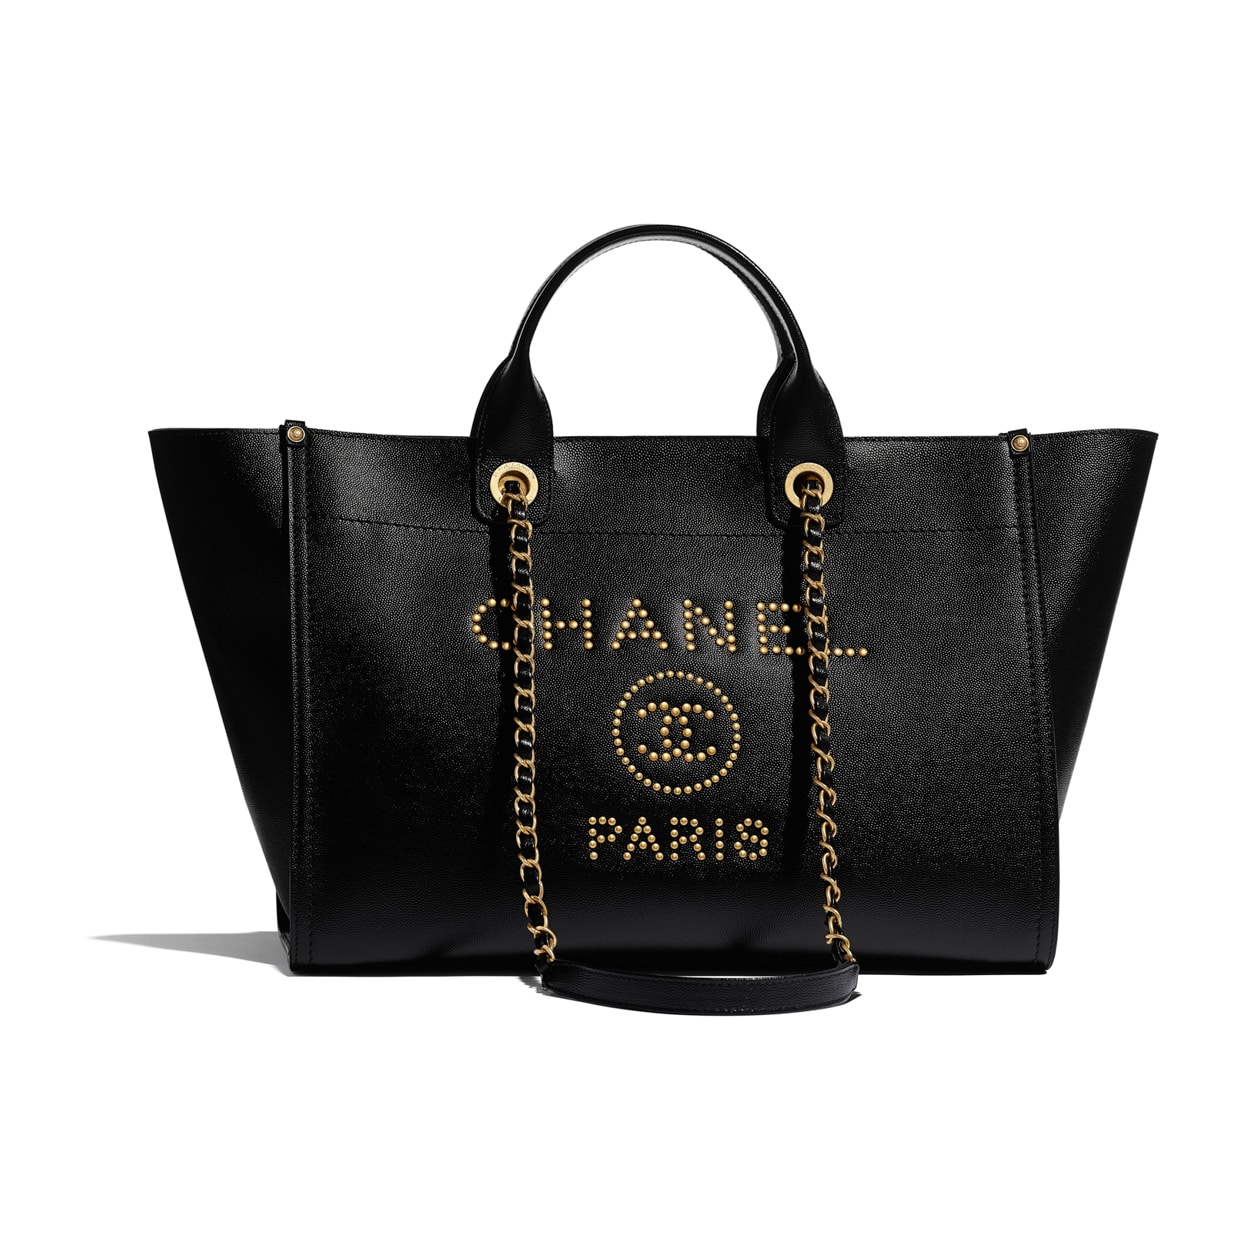 VTE Fashion - chanel gabrielle bag 2019 #chanelLaos